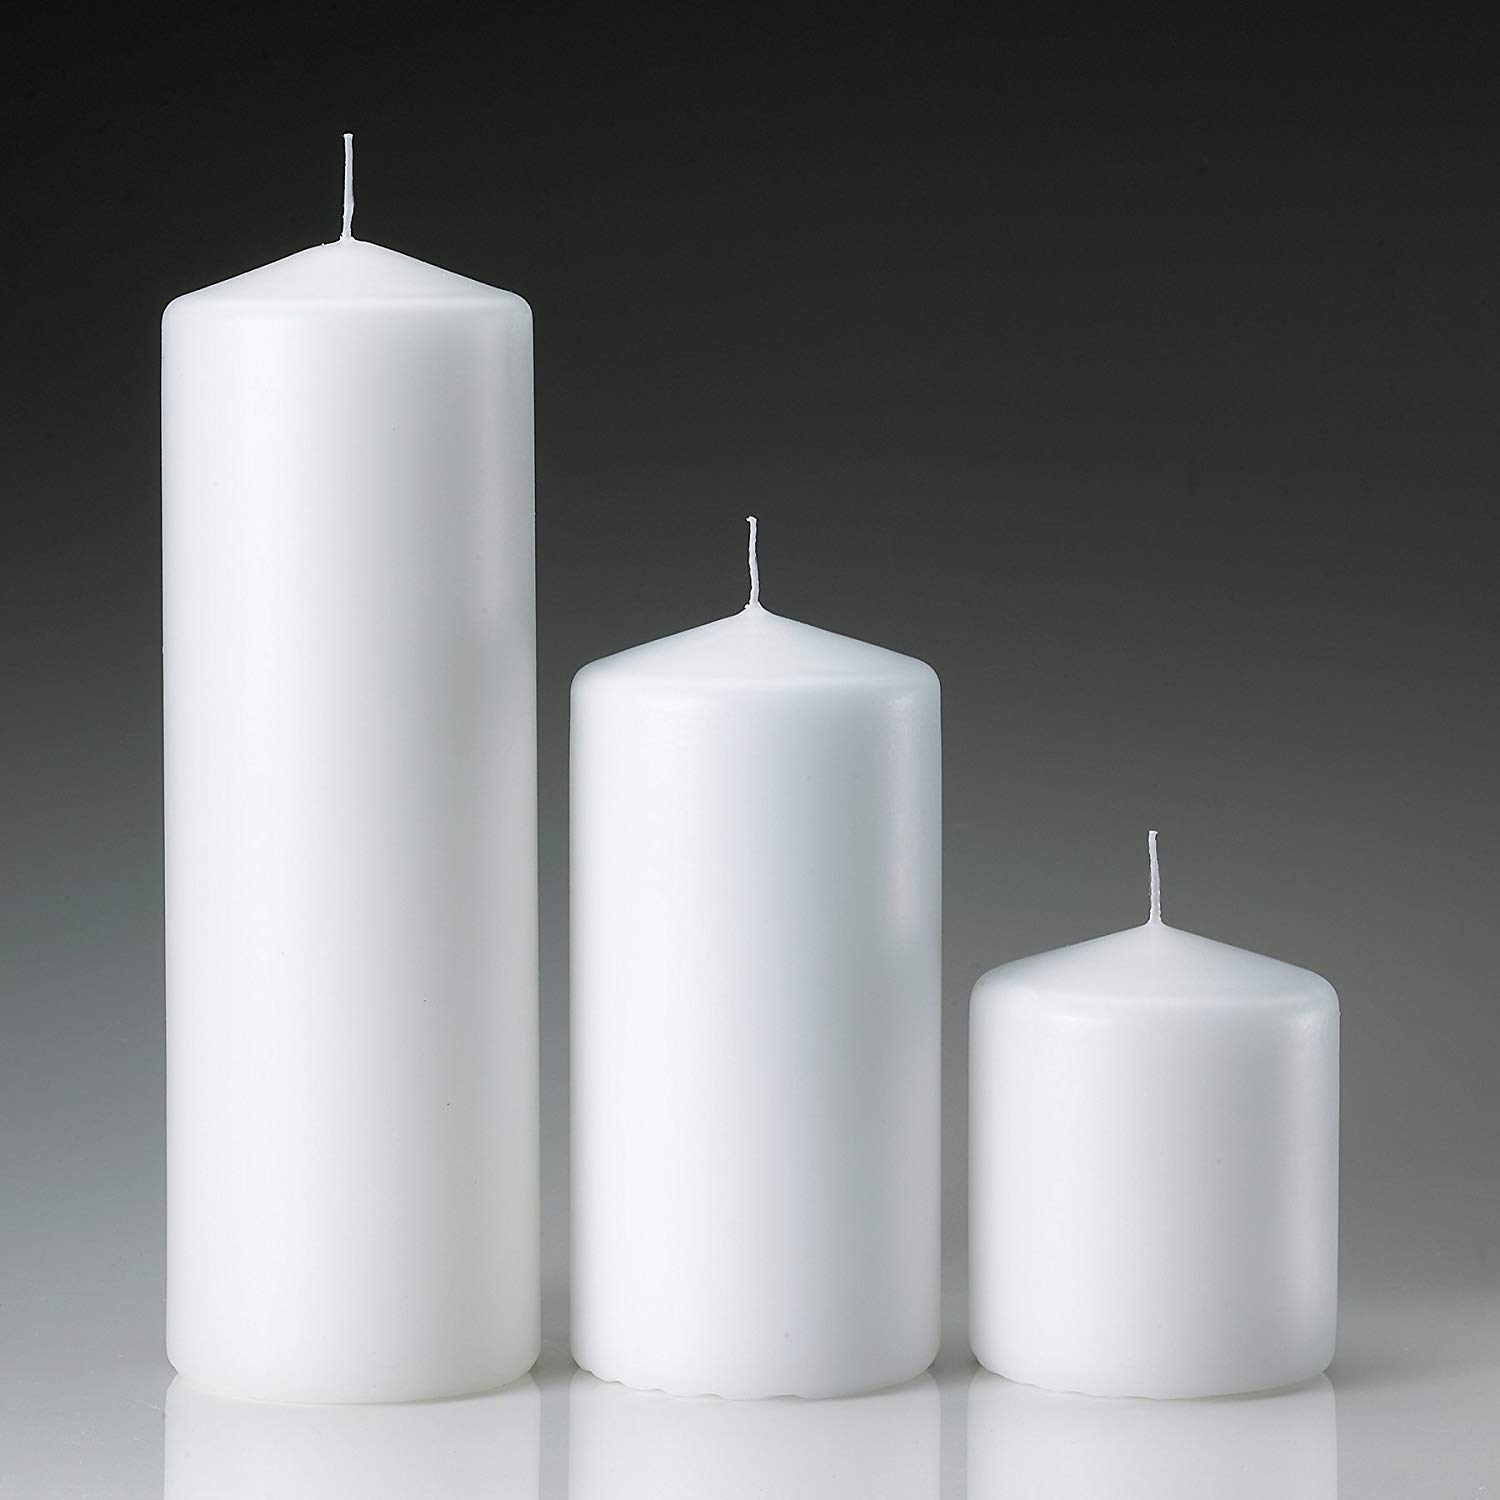 Amazon.com: White Pillar Candle Variety Set - 3 Unscented Pillar ...